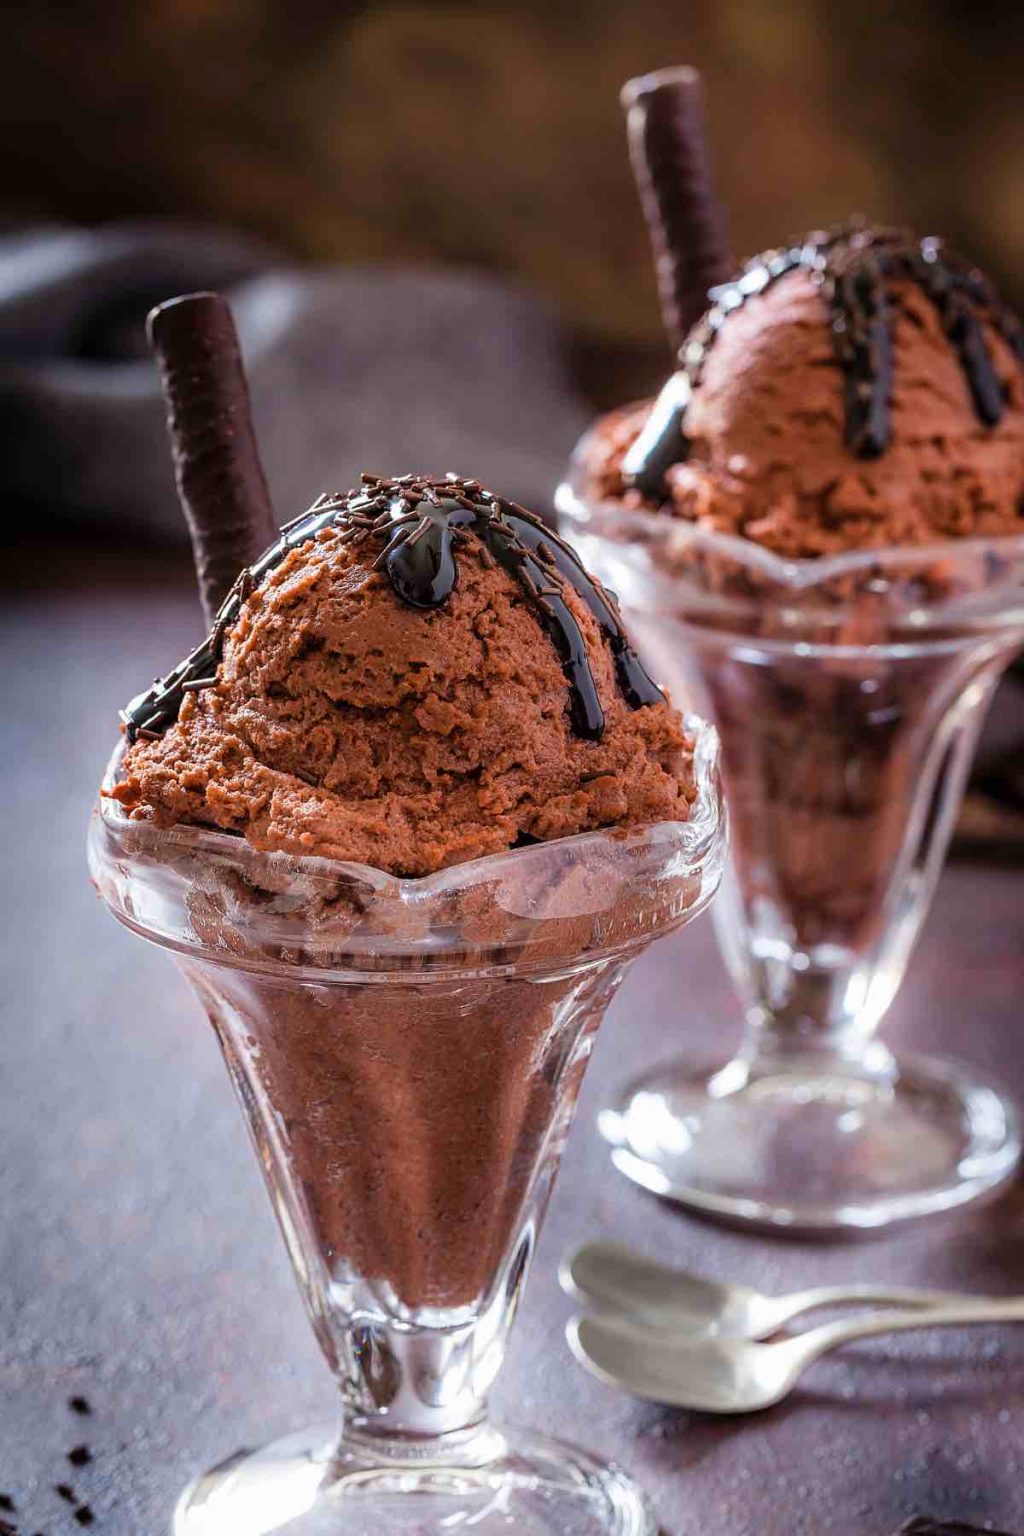 10 Best Ice Cream Sundaes That Everyone Will Love - IzzyCooking